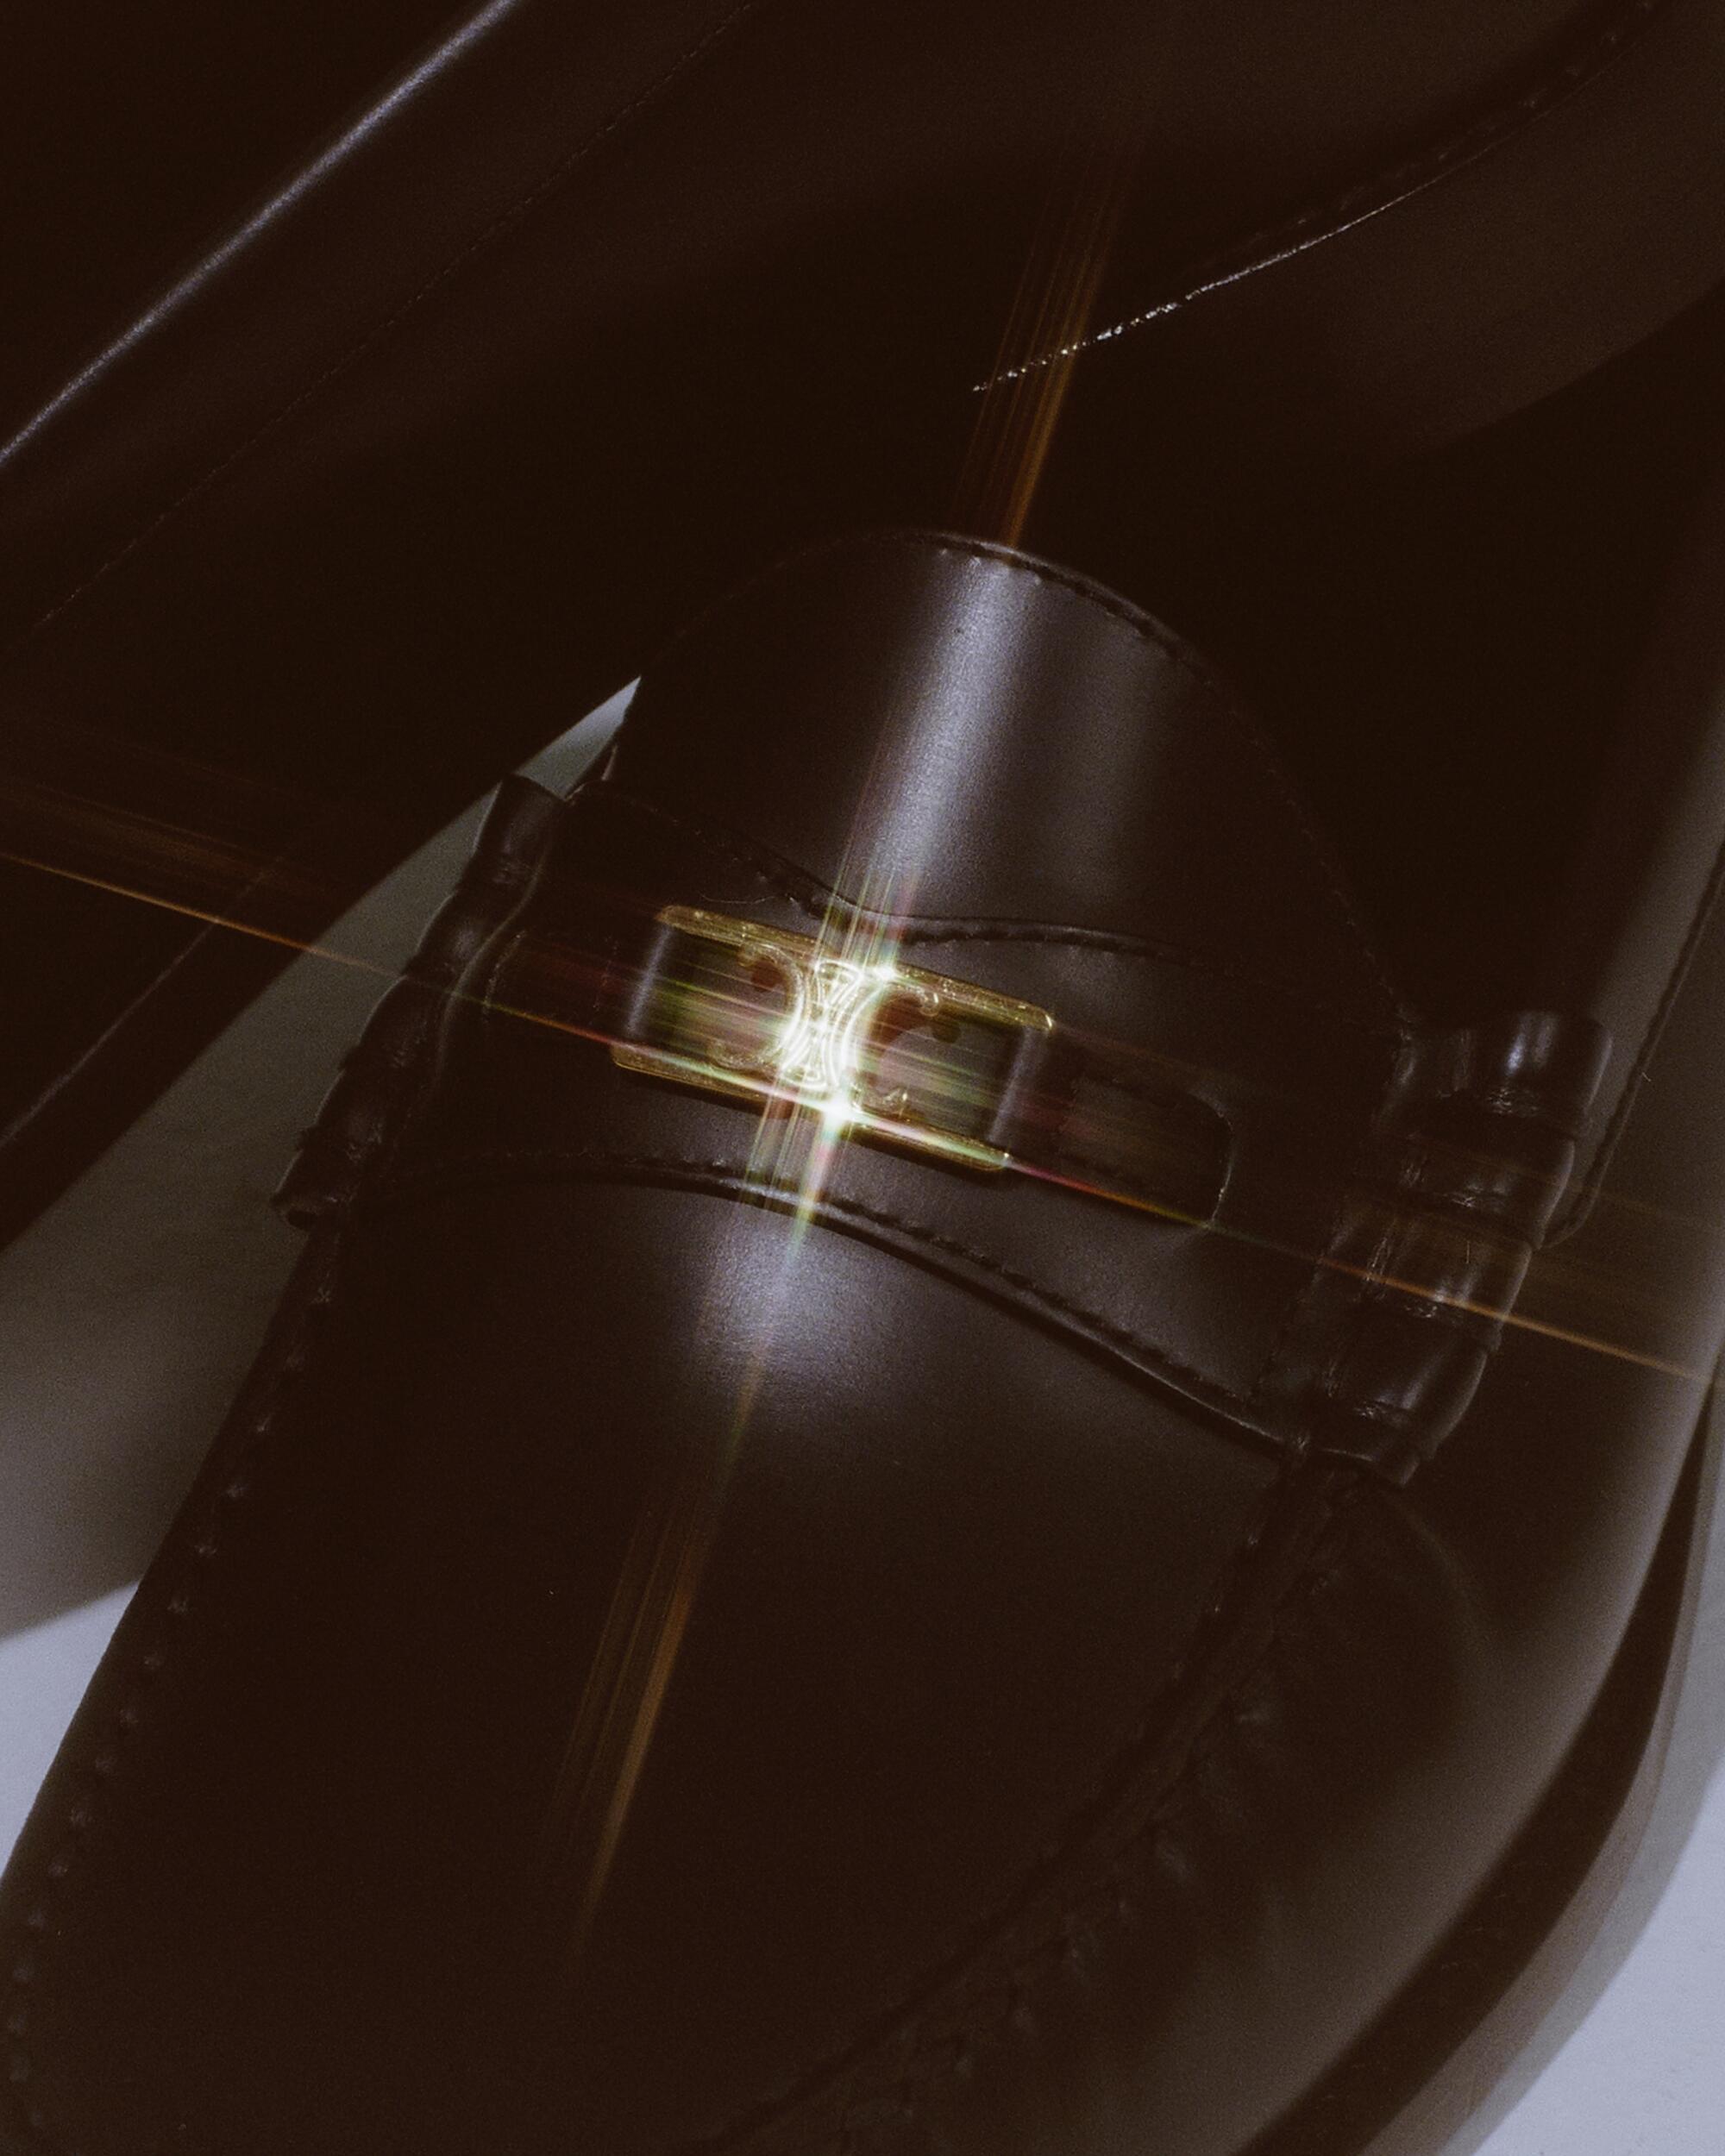 A closeup of a glistening Celine black house shoe